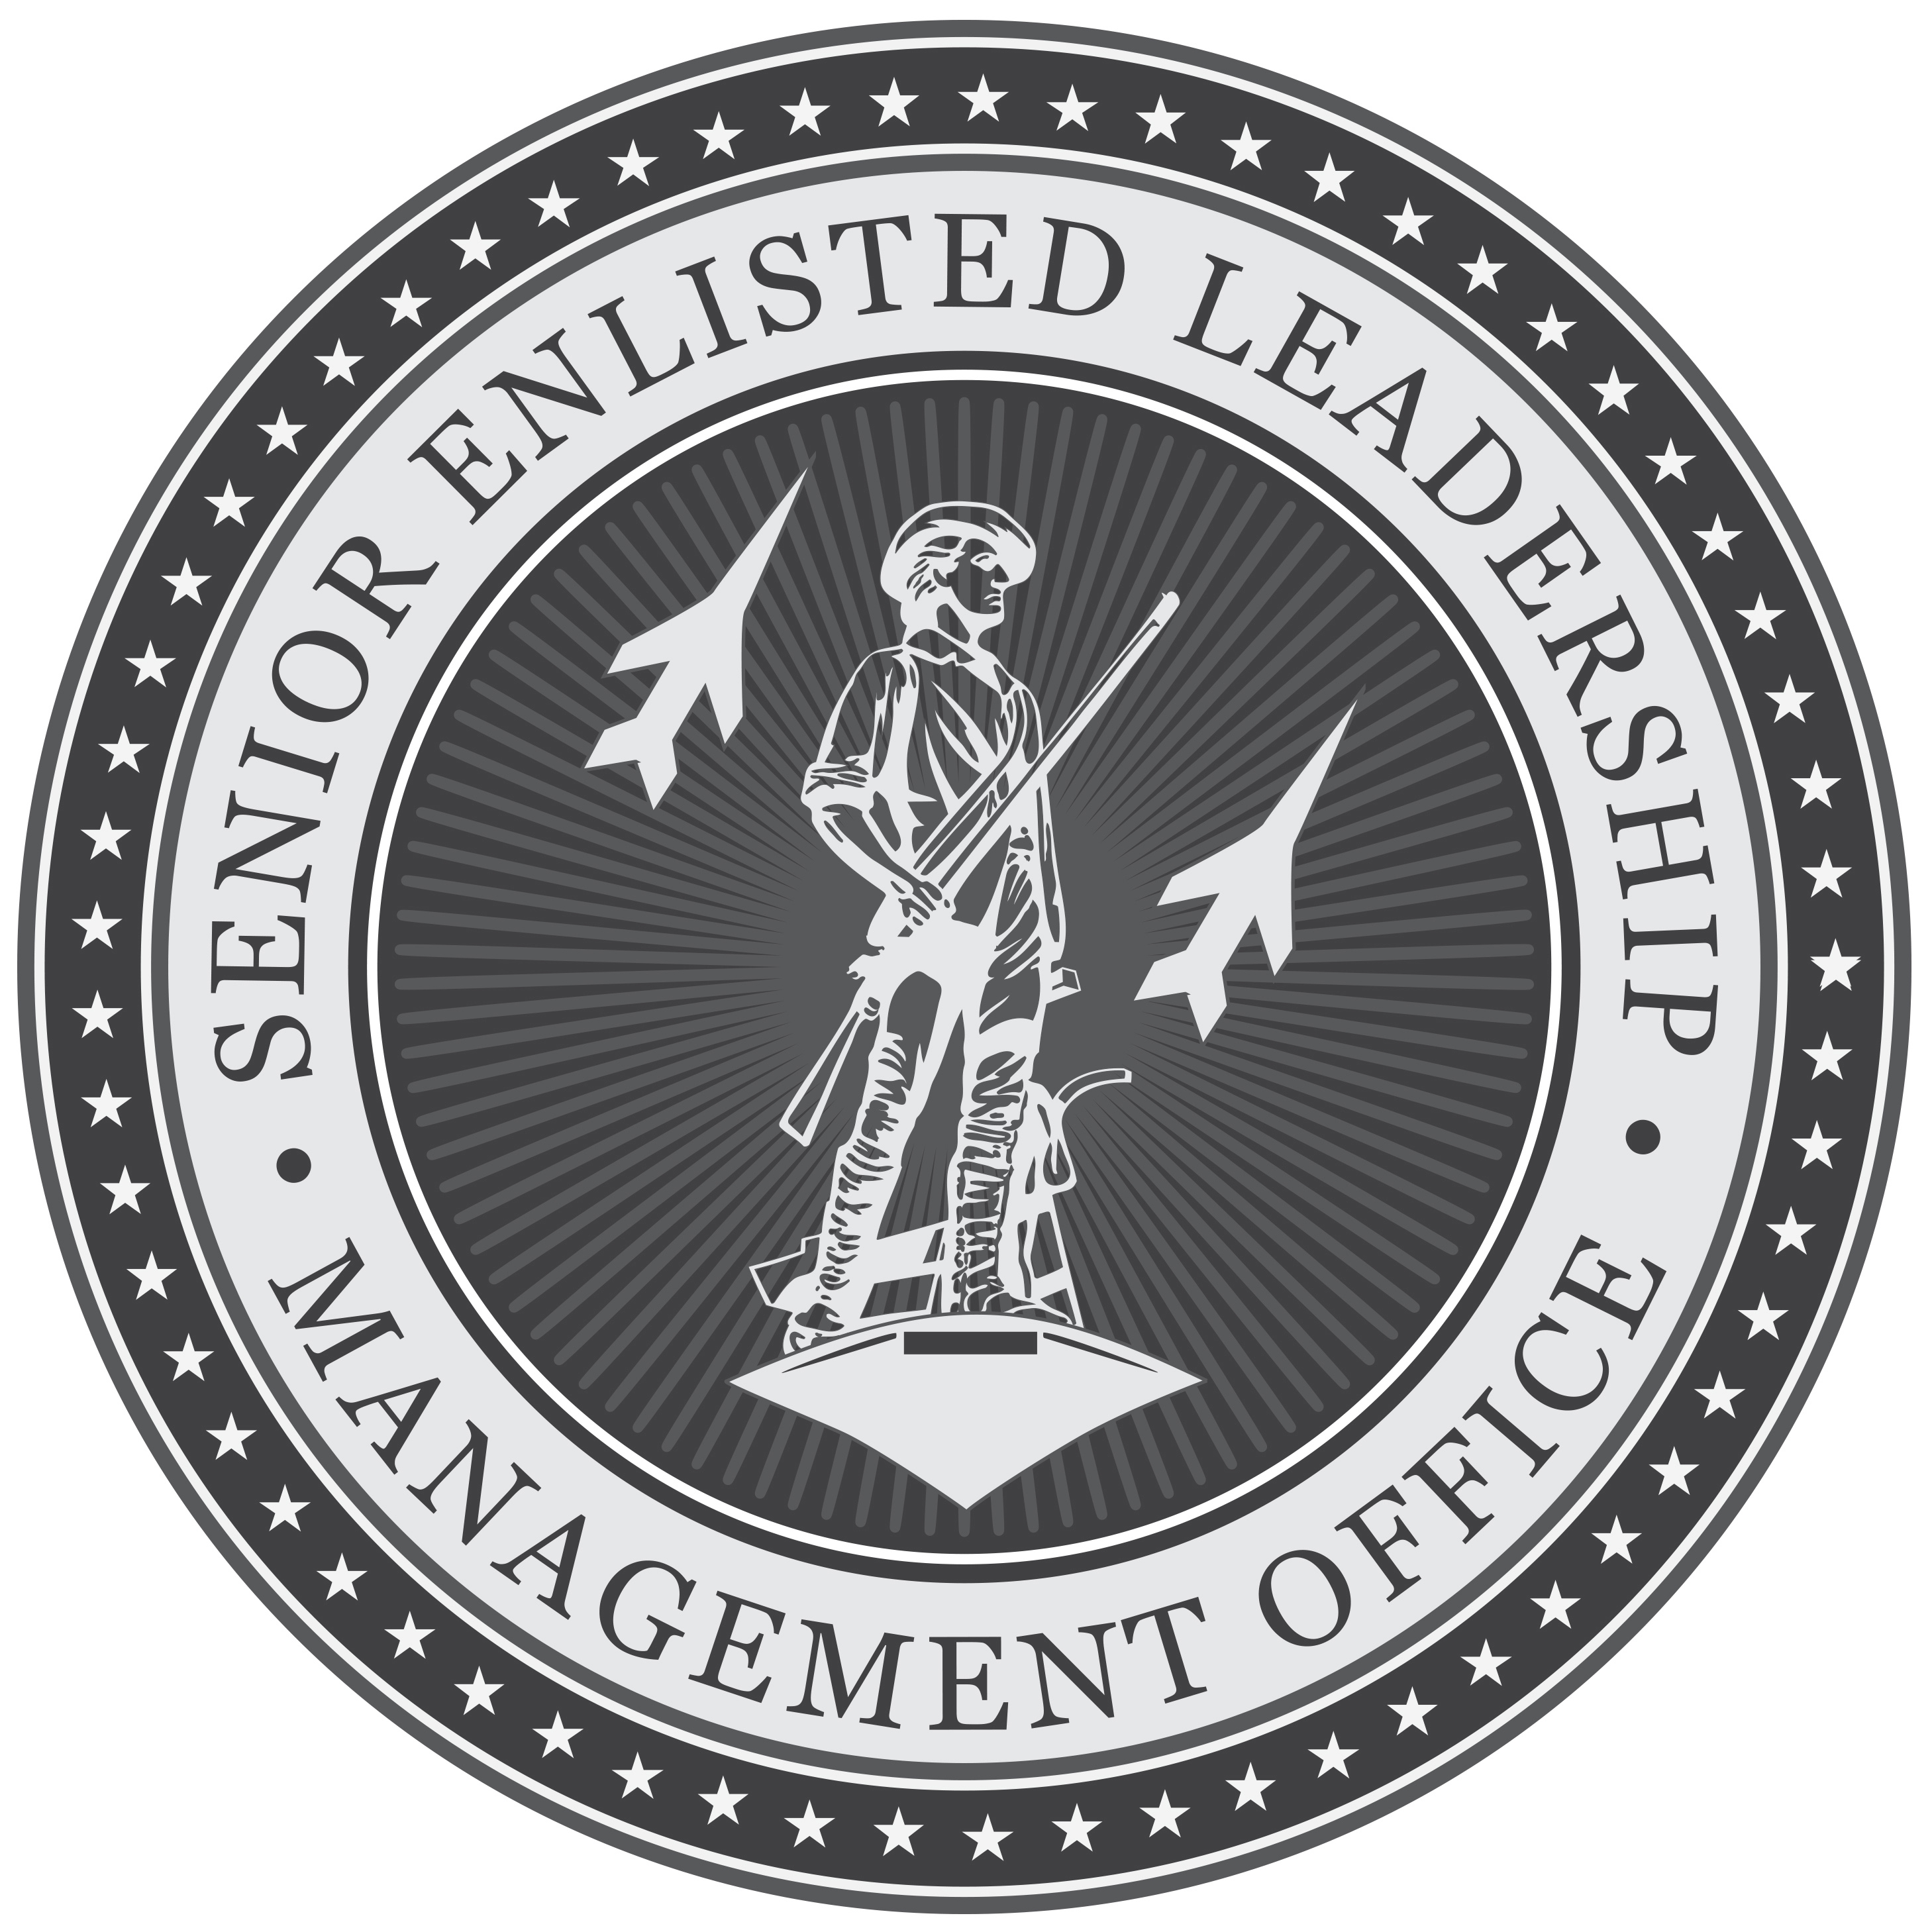 Air National Guard Senior Enlisted Leadership Management Office